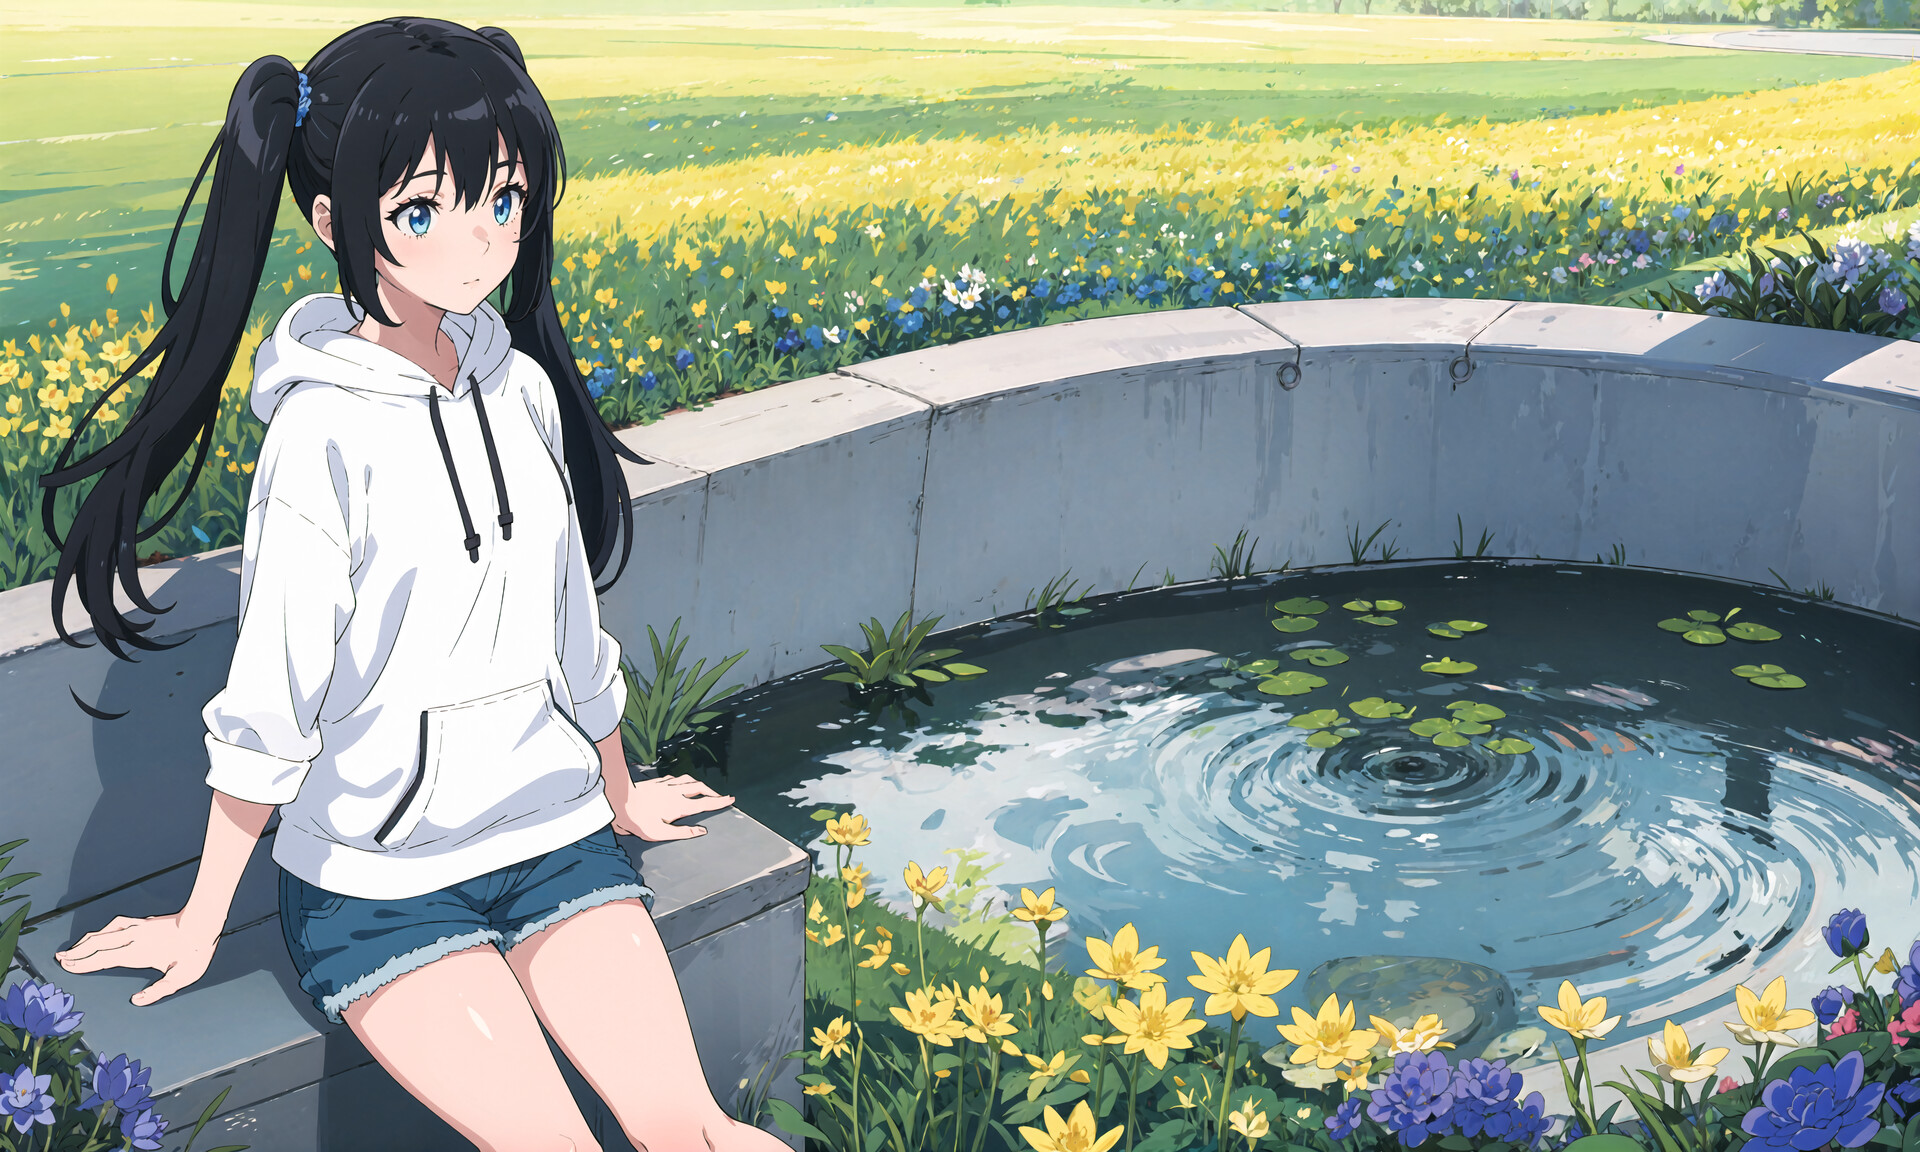 Anime Girls in a Wildflower Field 8k Graphic · Creative Fabrica